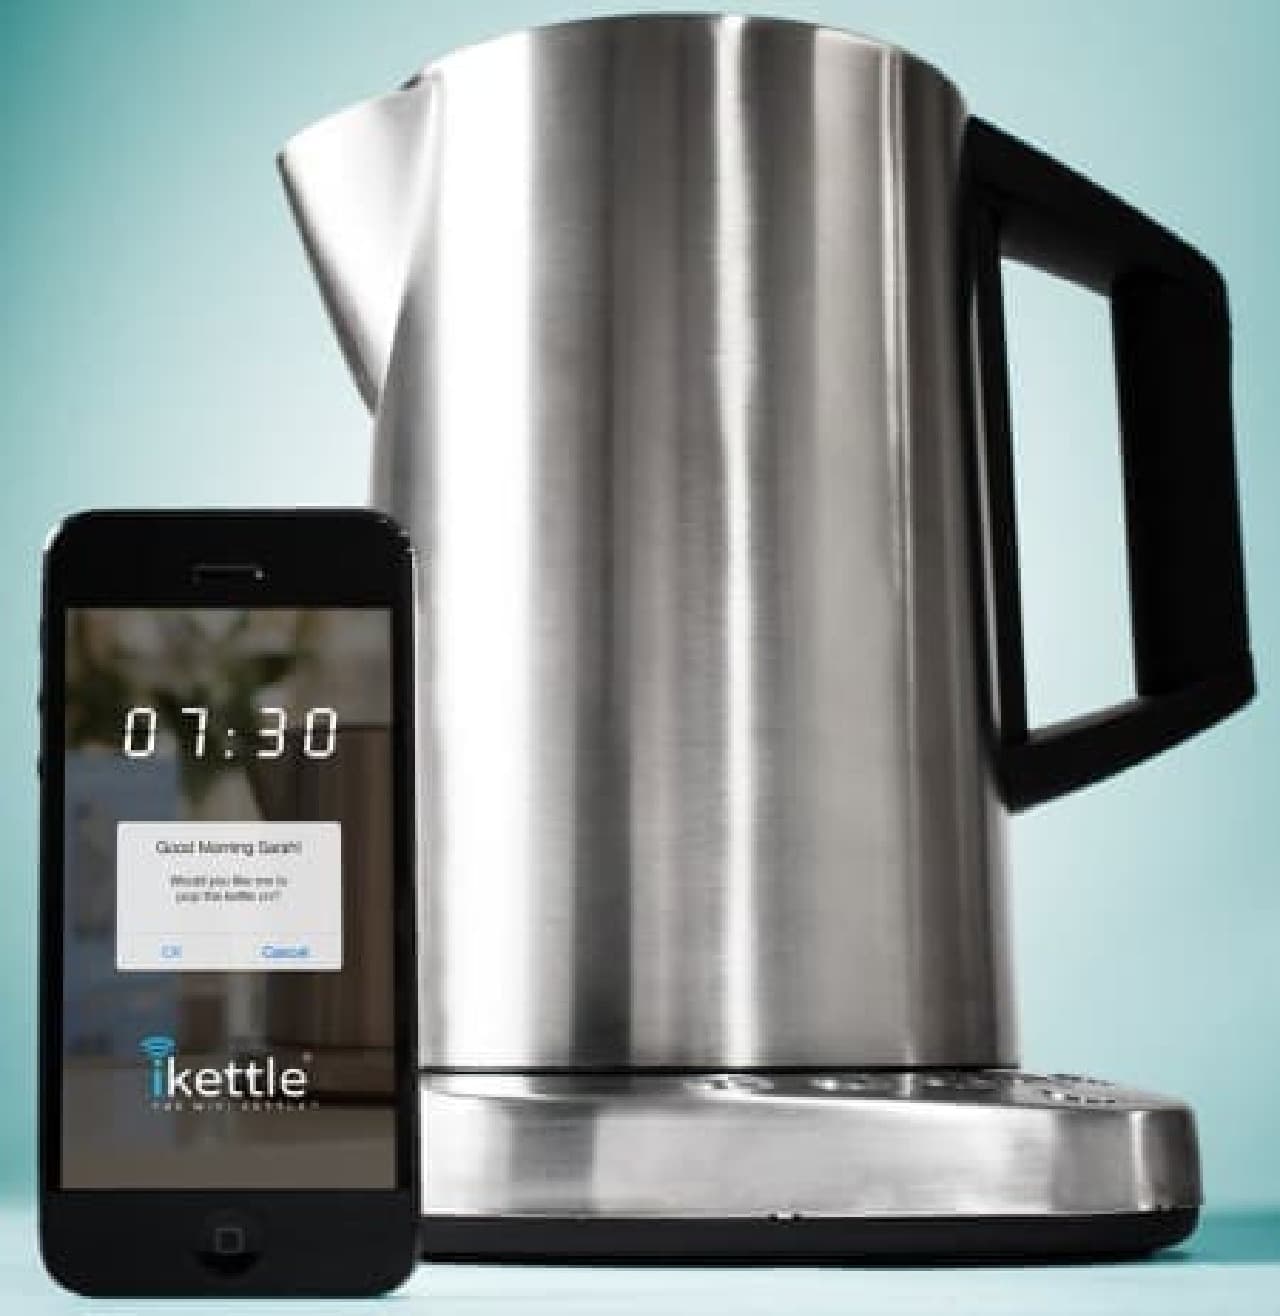 "The world's first Wi-Fi kettle" (C) Firebox.com